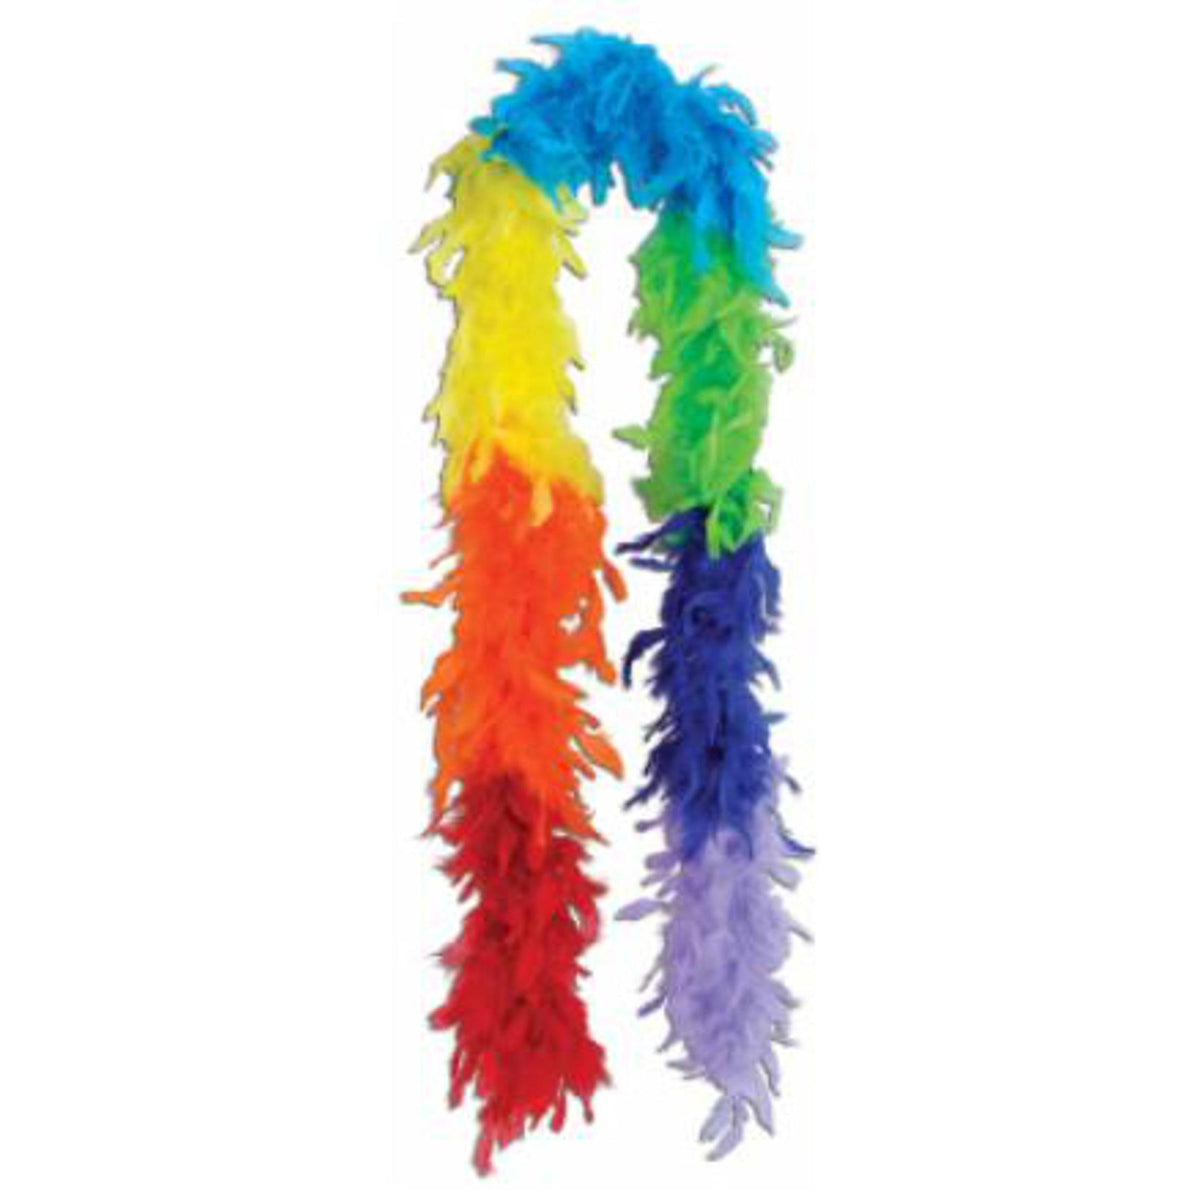 funcarnival-com Accessorize with Flair: Irish Tri-Color Feather Boa